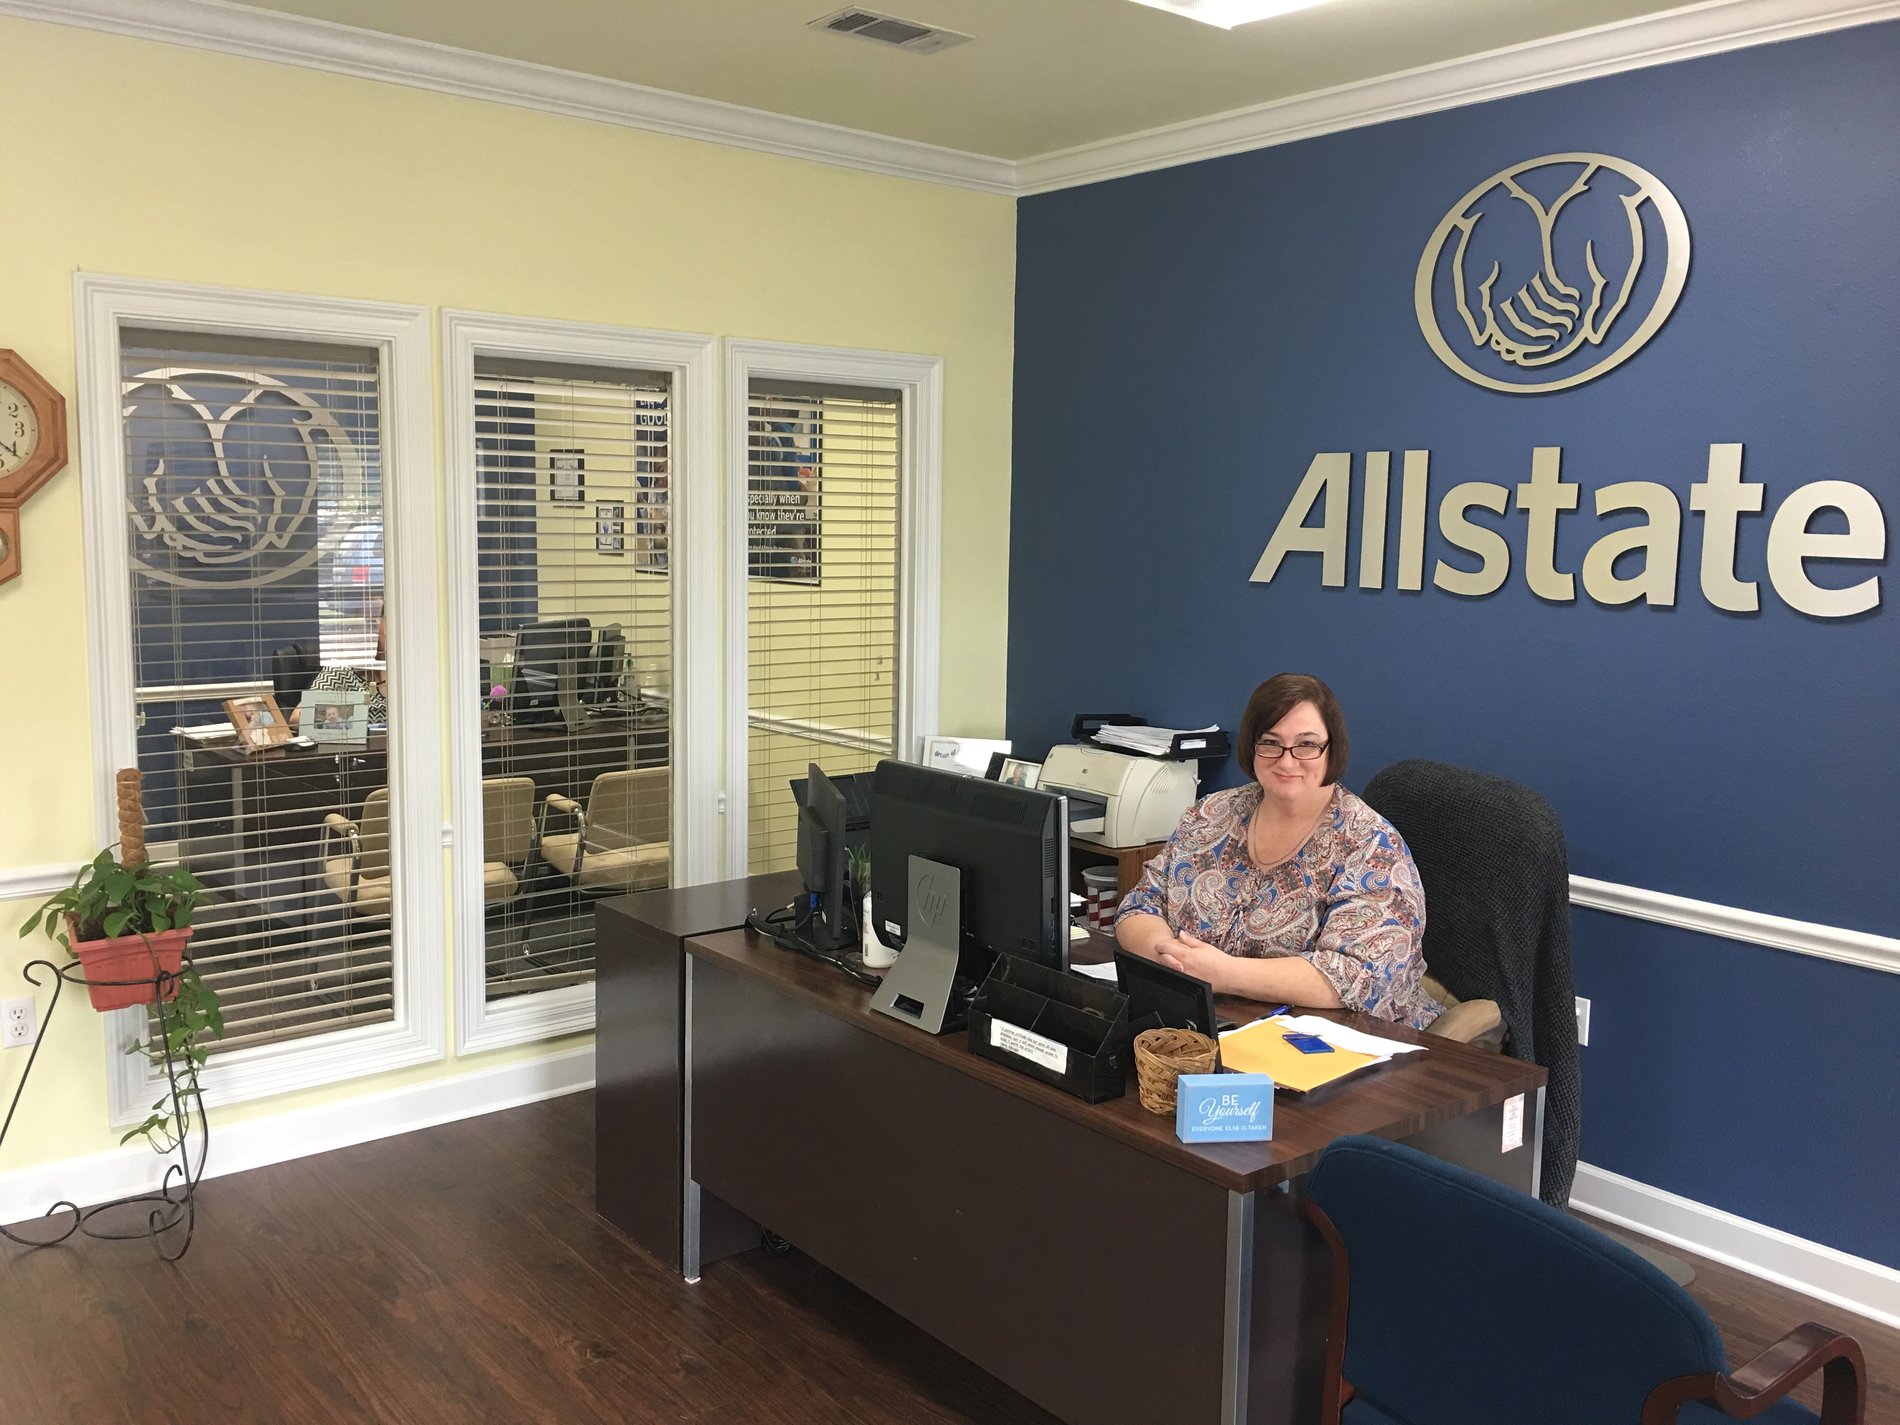 Allstate | Car Insurance in Ponchatoula, LA - Colby McCurdy